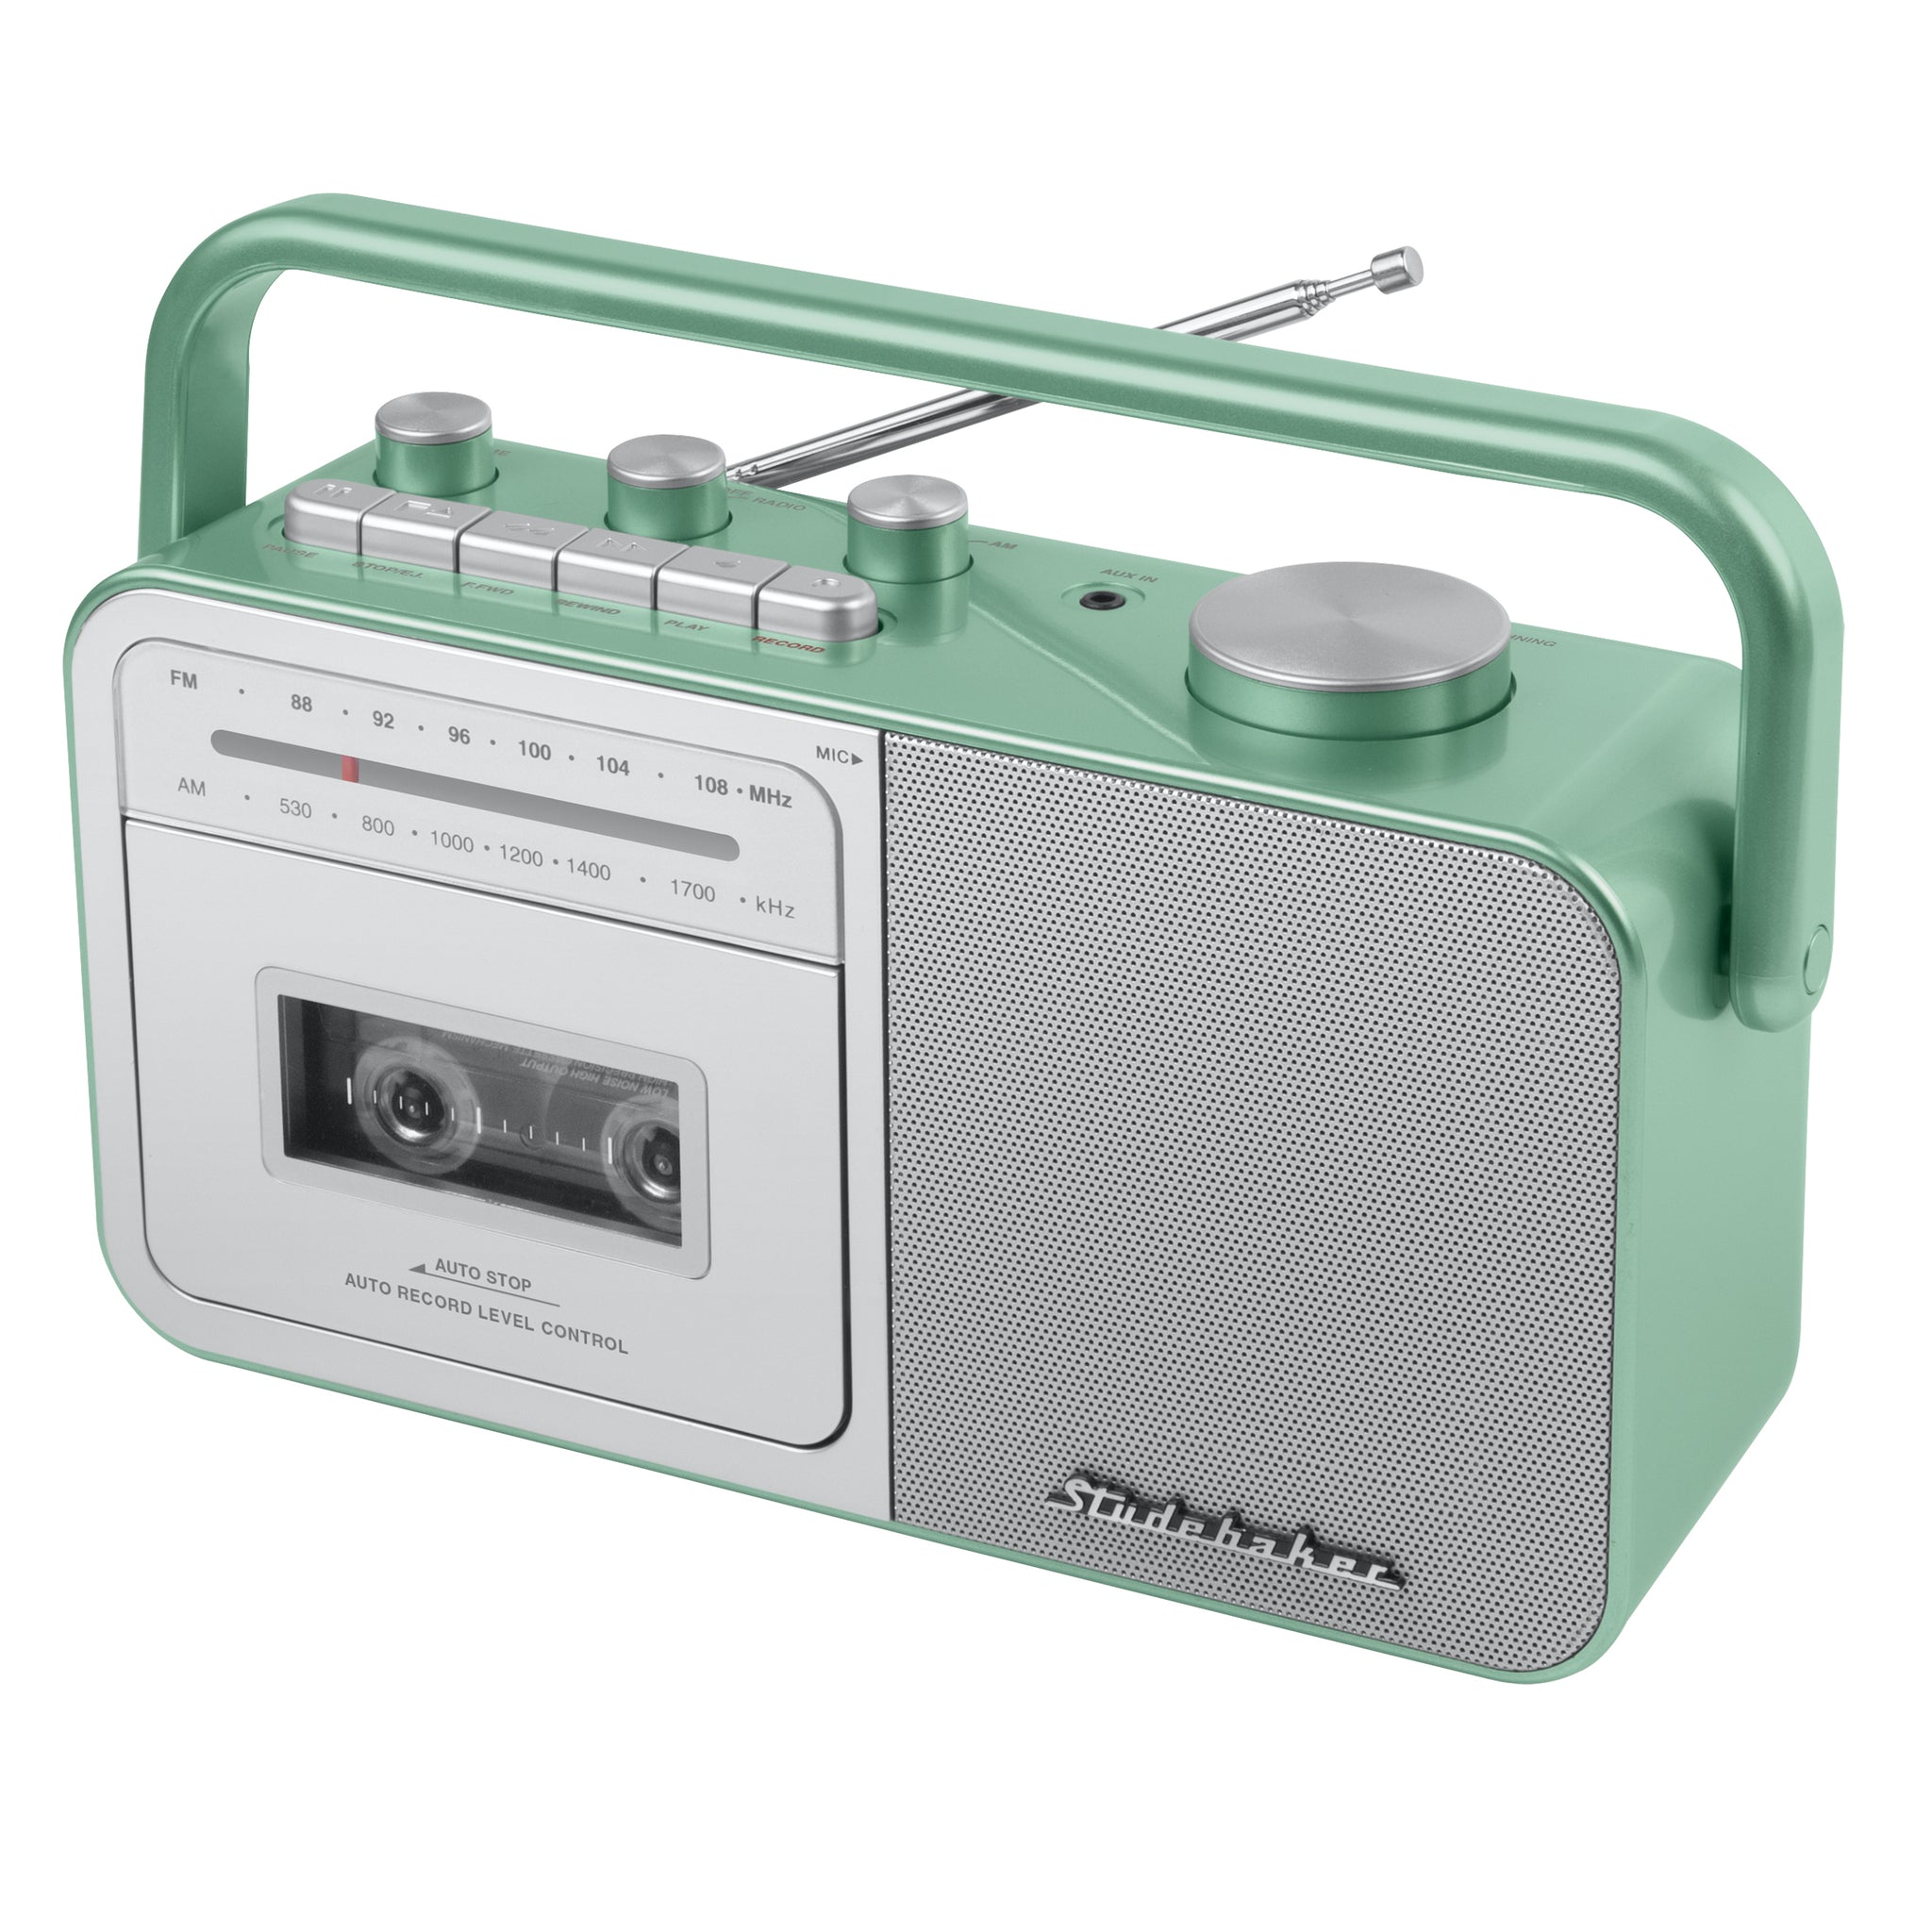 1980's Style Retro Radio Cassette Player and Cassette Recorder